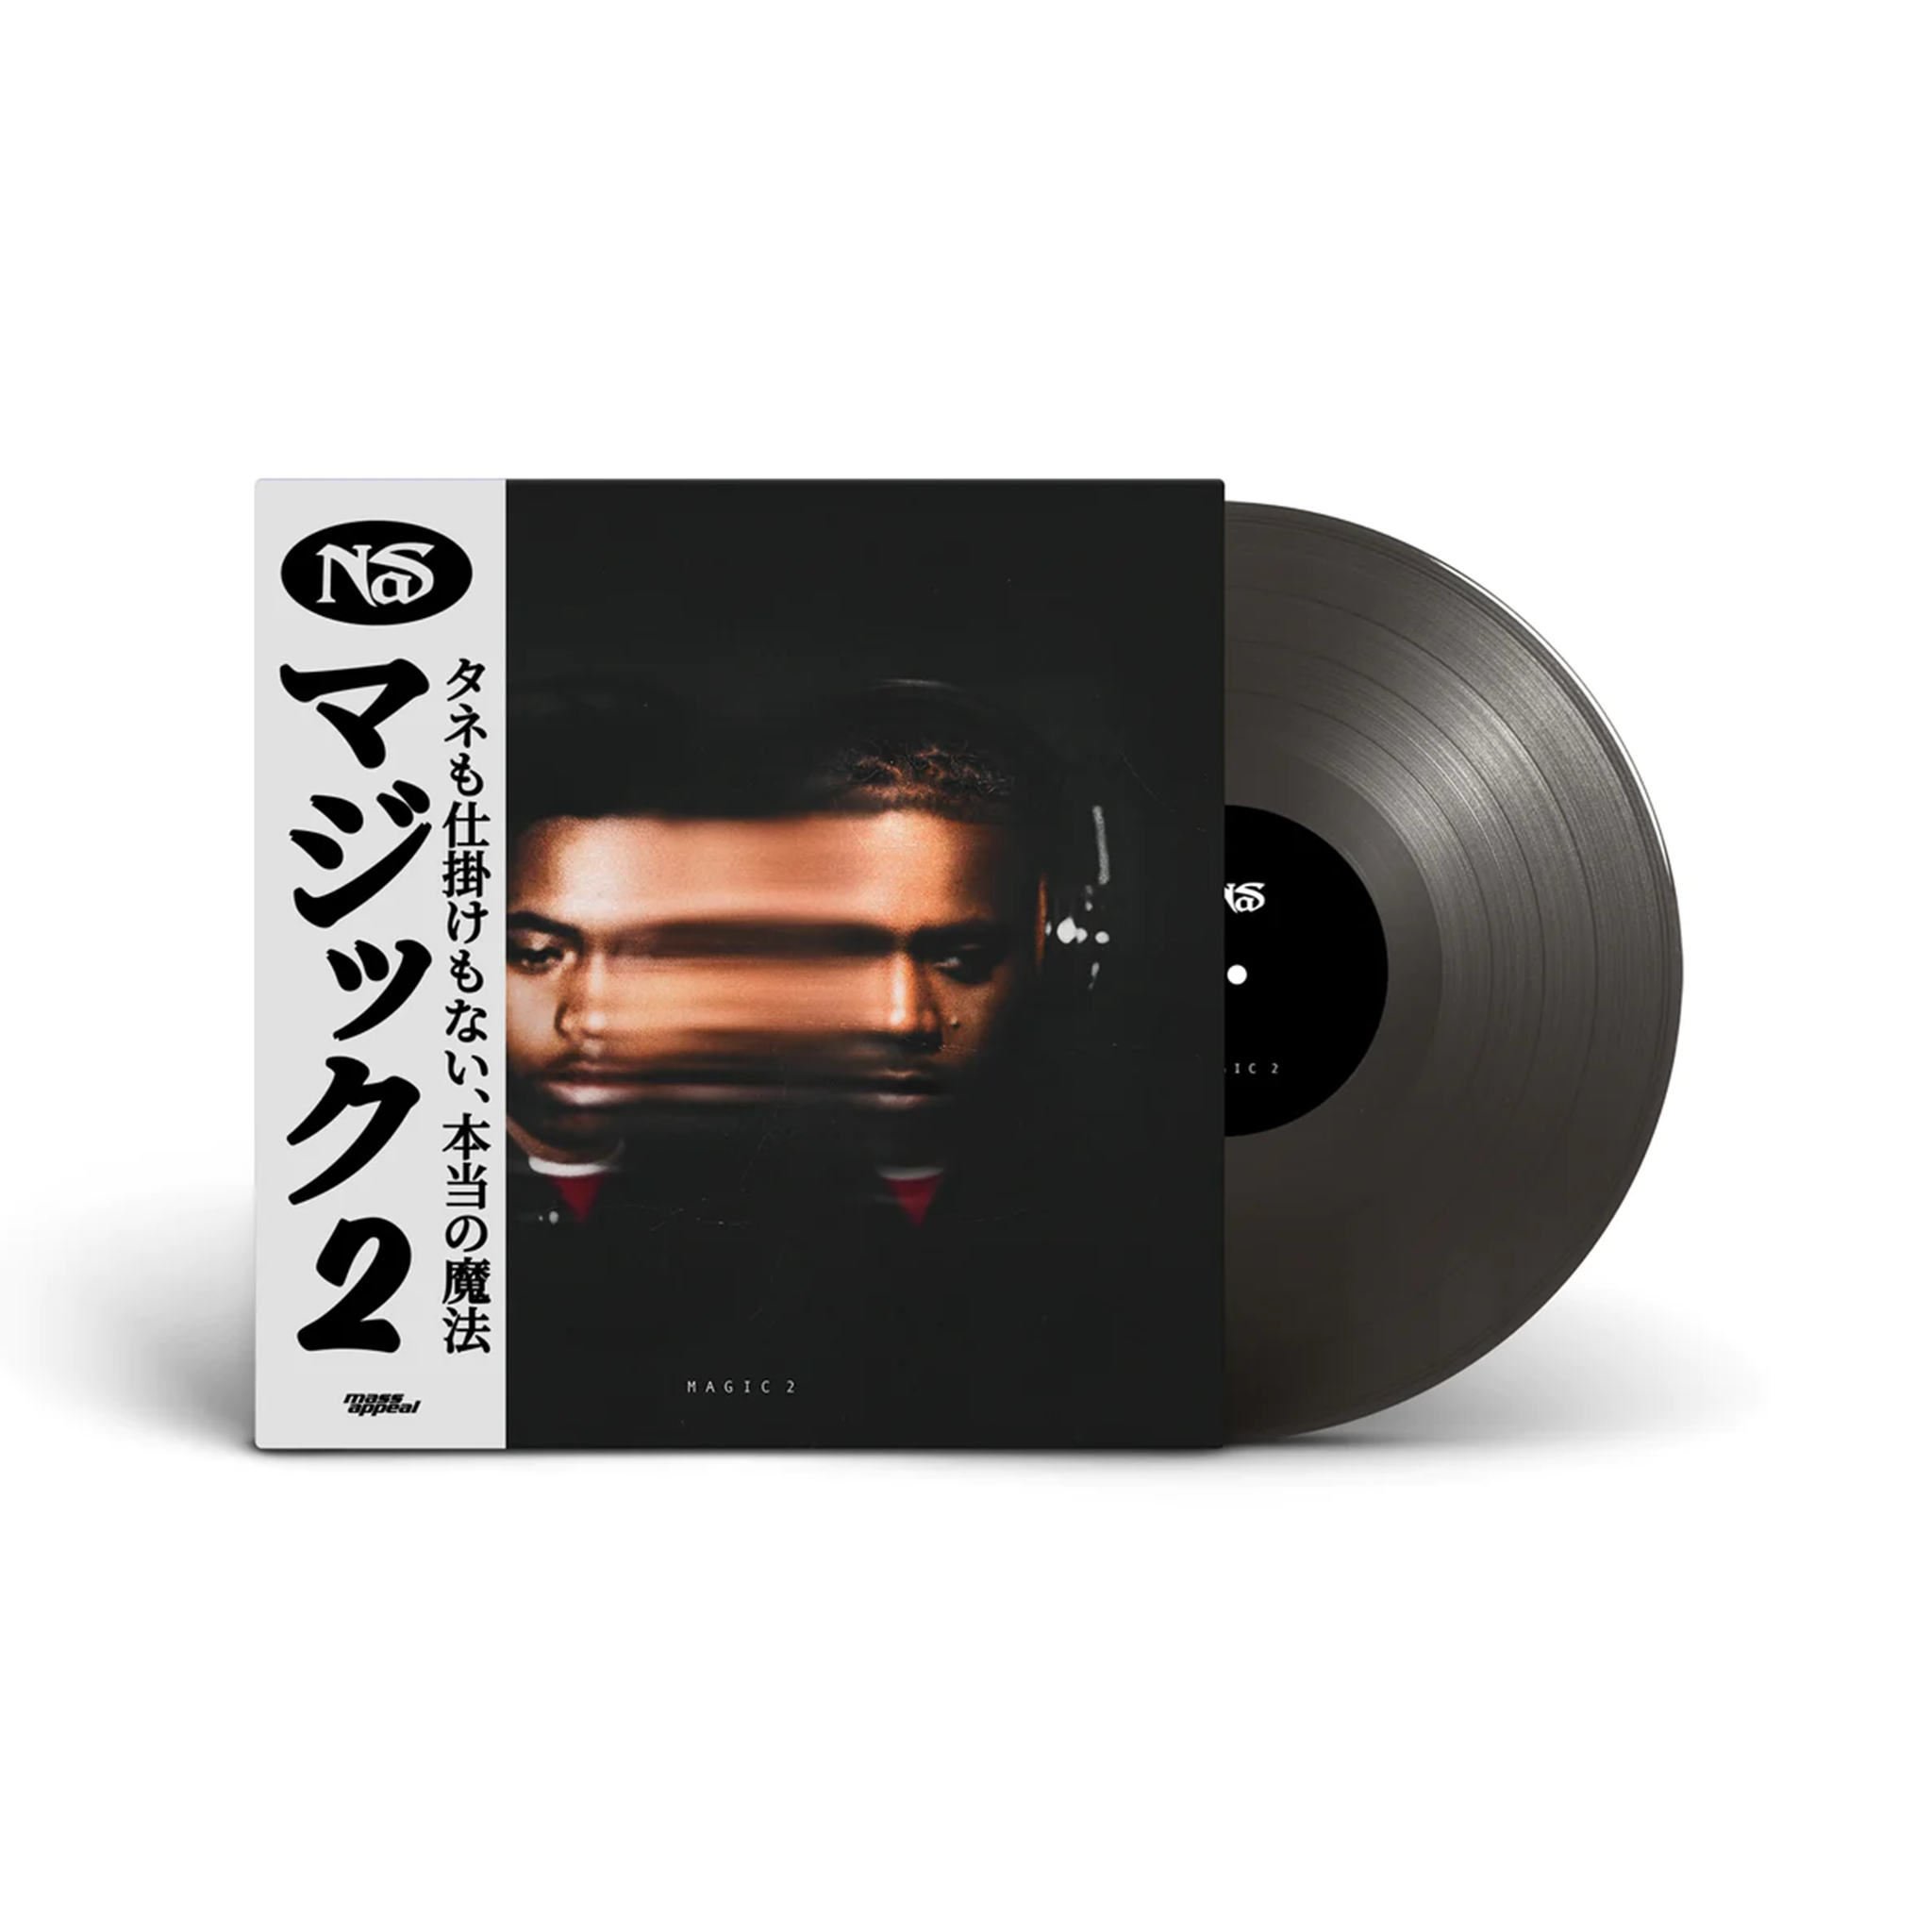 Nas “Magic 2” (Black Ice Vinyl LP) (Now Shipping) – shop.massappeal